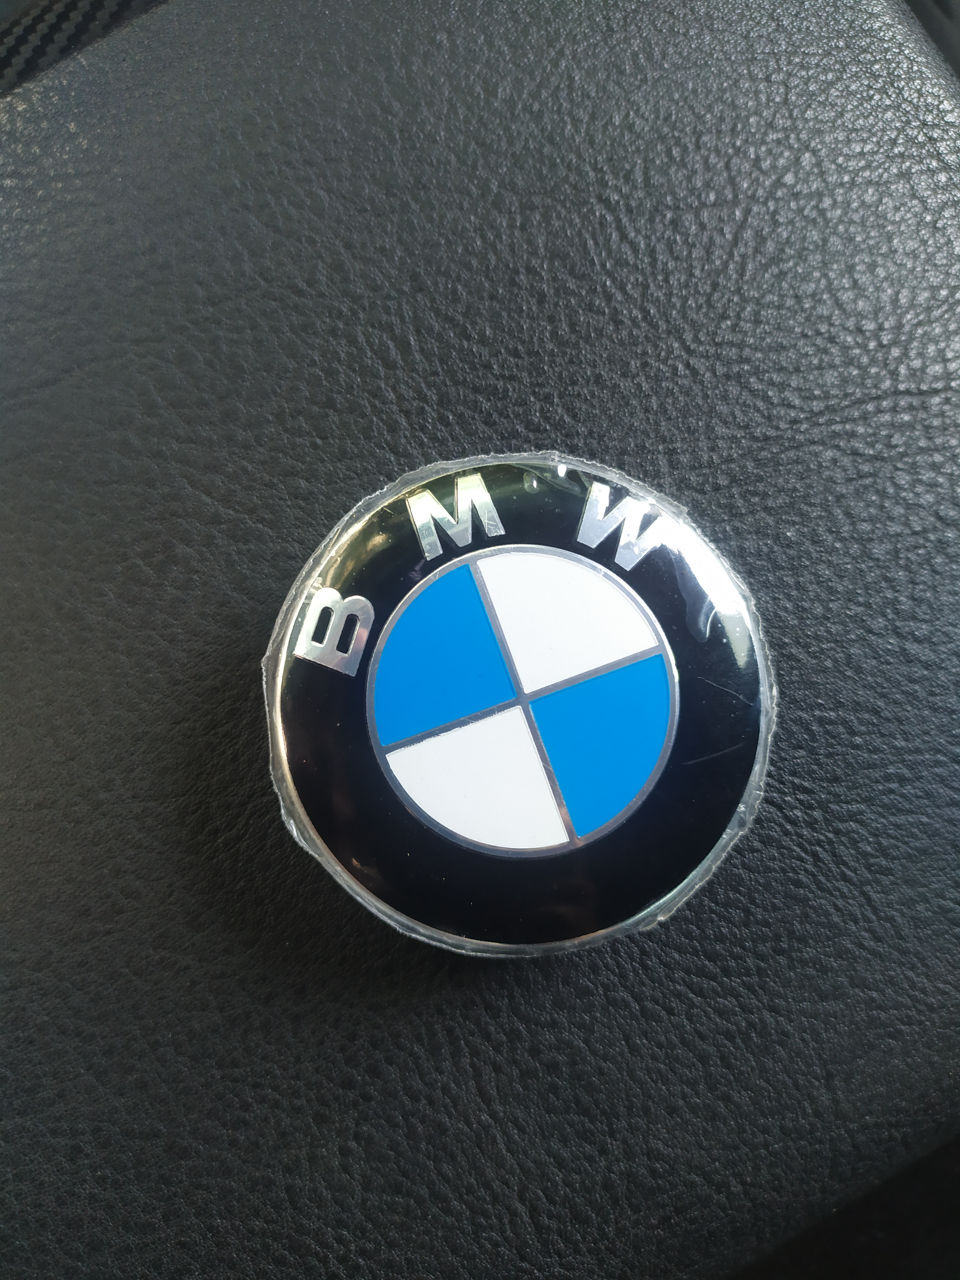 Юбилейный значок бмв. Значок БМВ из пластилина. БМВ значок Юбилейная версия. BMW значок на одежду.